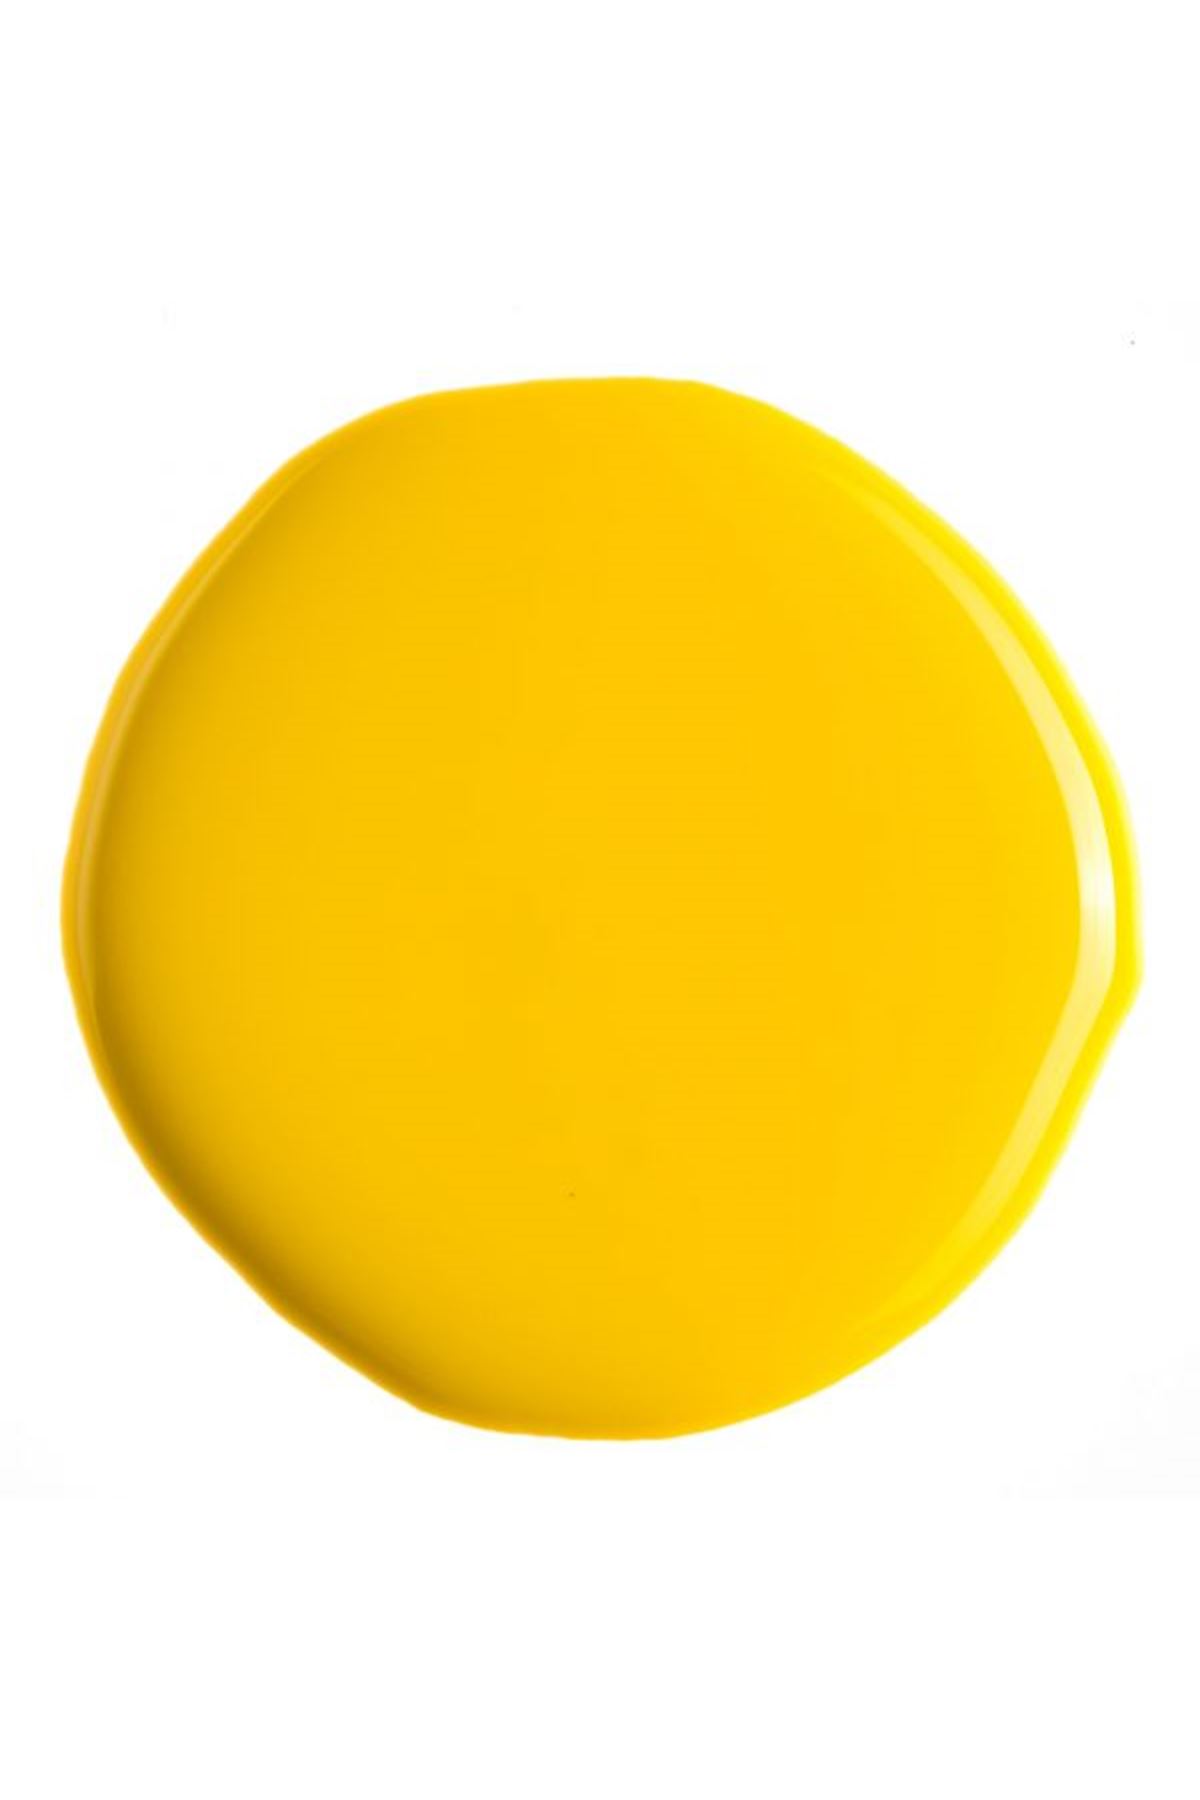 Brtr Kimya Sarı Pigment Pasta 20 gr - Köpük Efekti -Akrilik Pouring